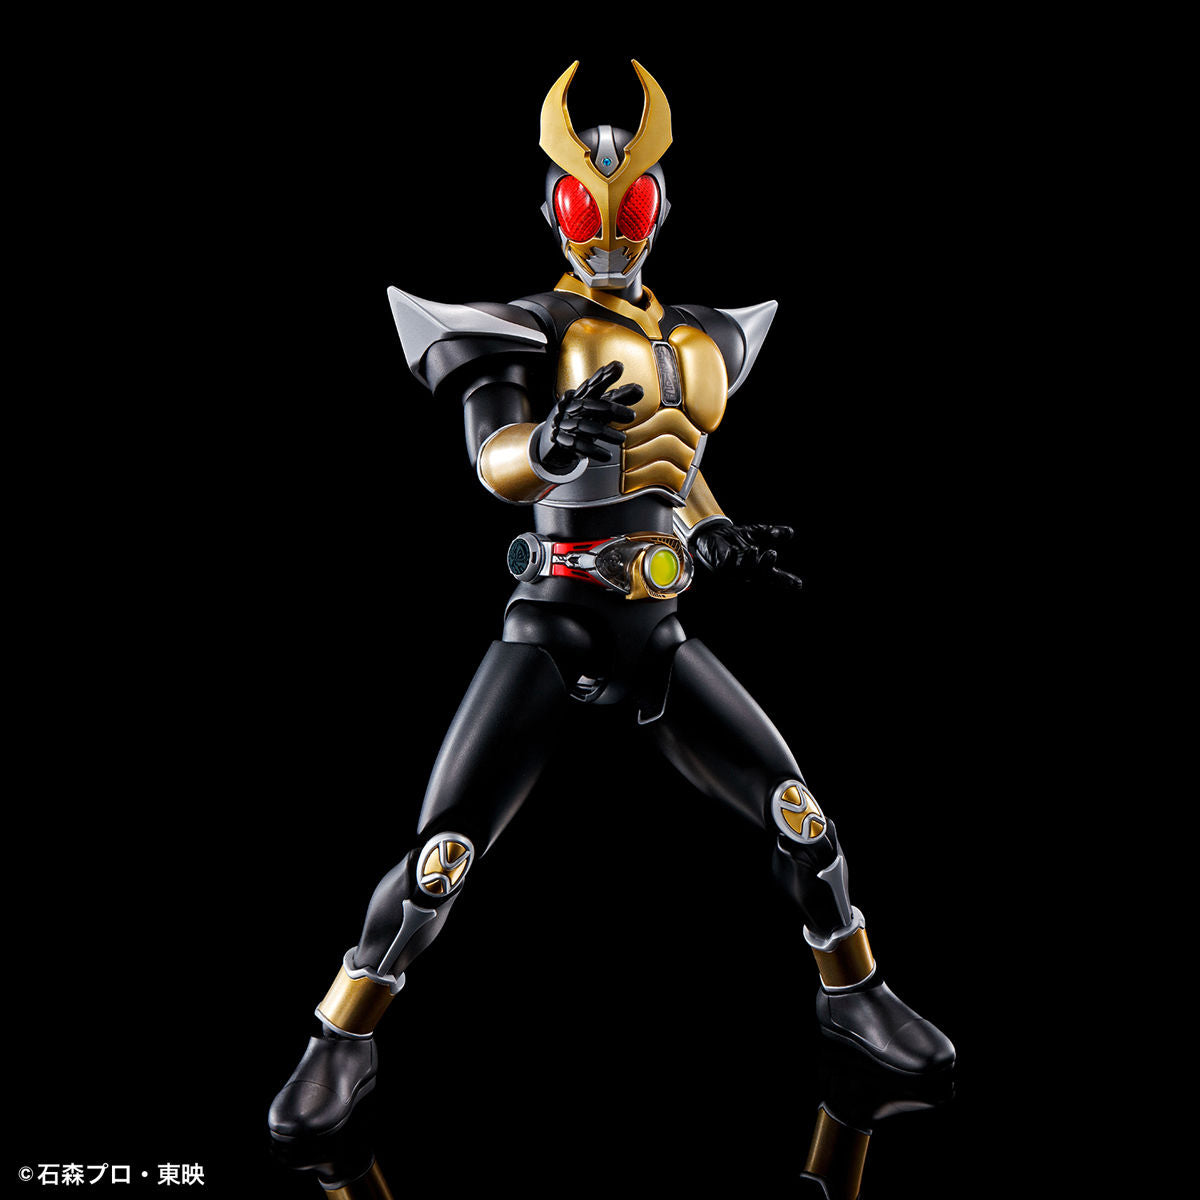 Figure-Rise Standard Kamen Rider Masked Rider Agito Ground Form